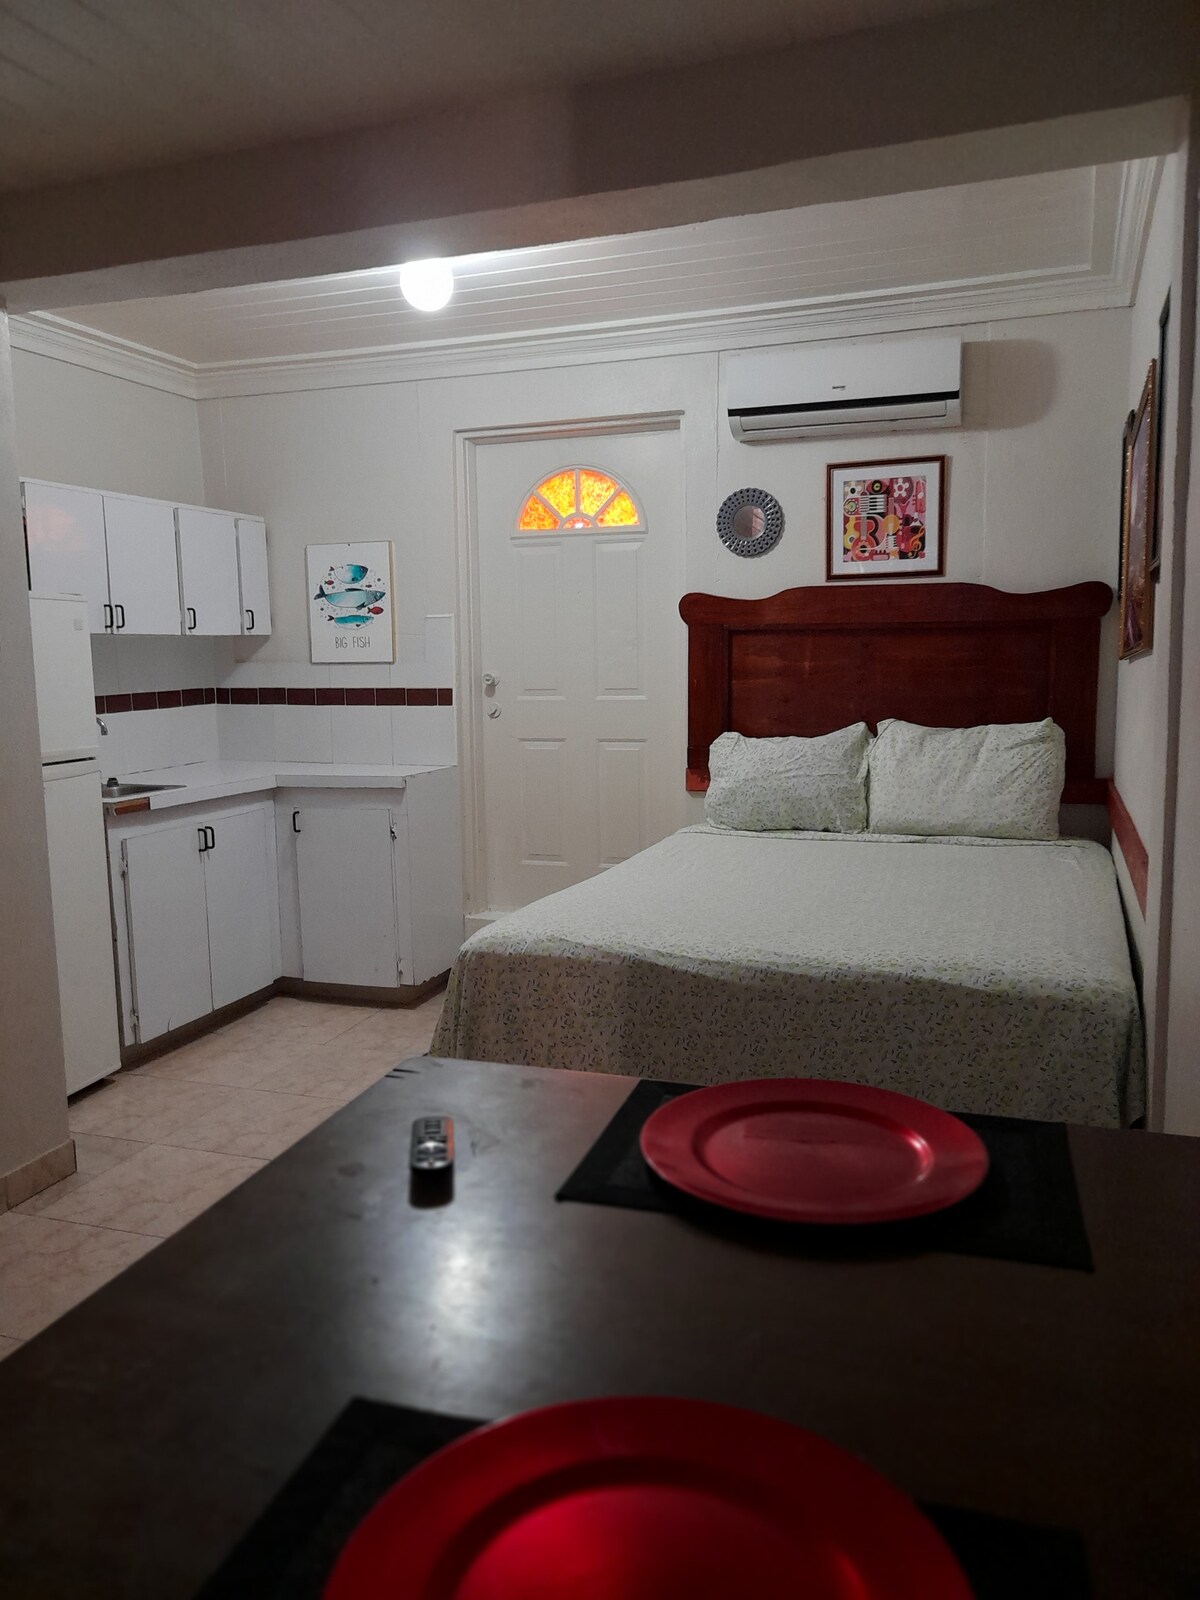 Charming 1- bedroom's hostel in Nassau,Bahamas